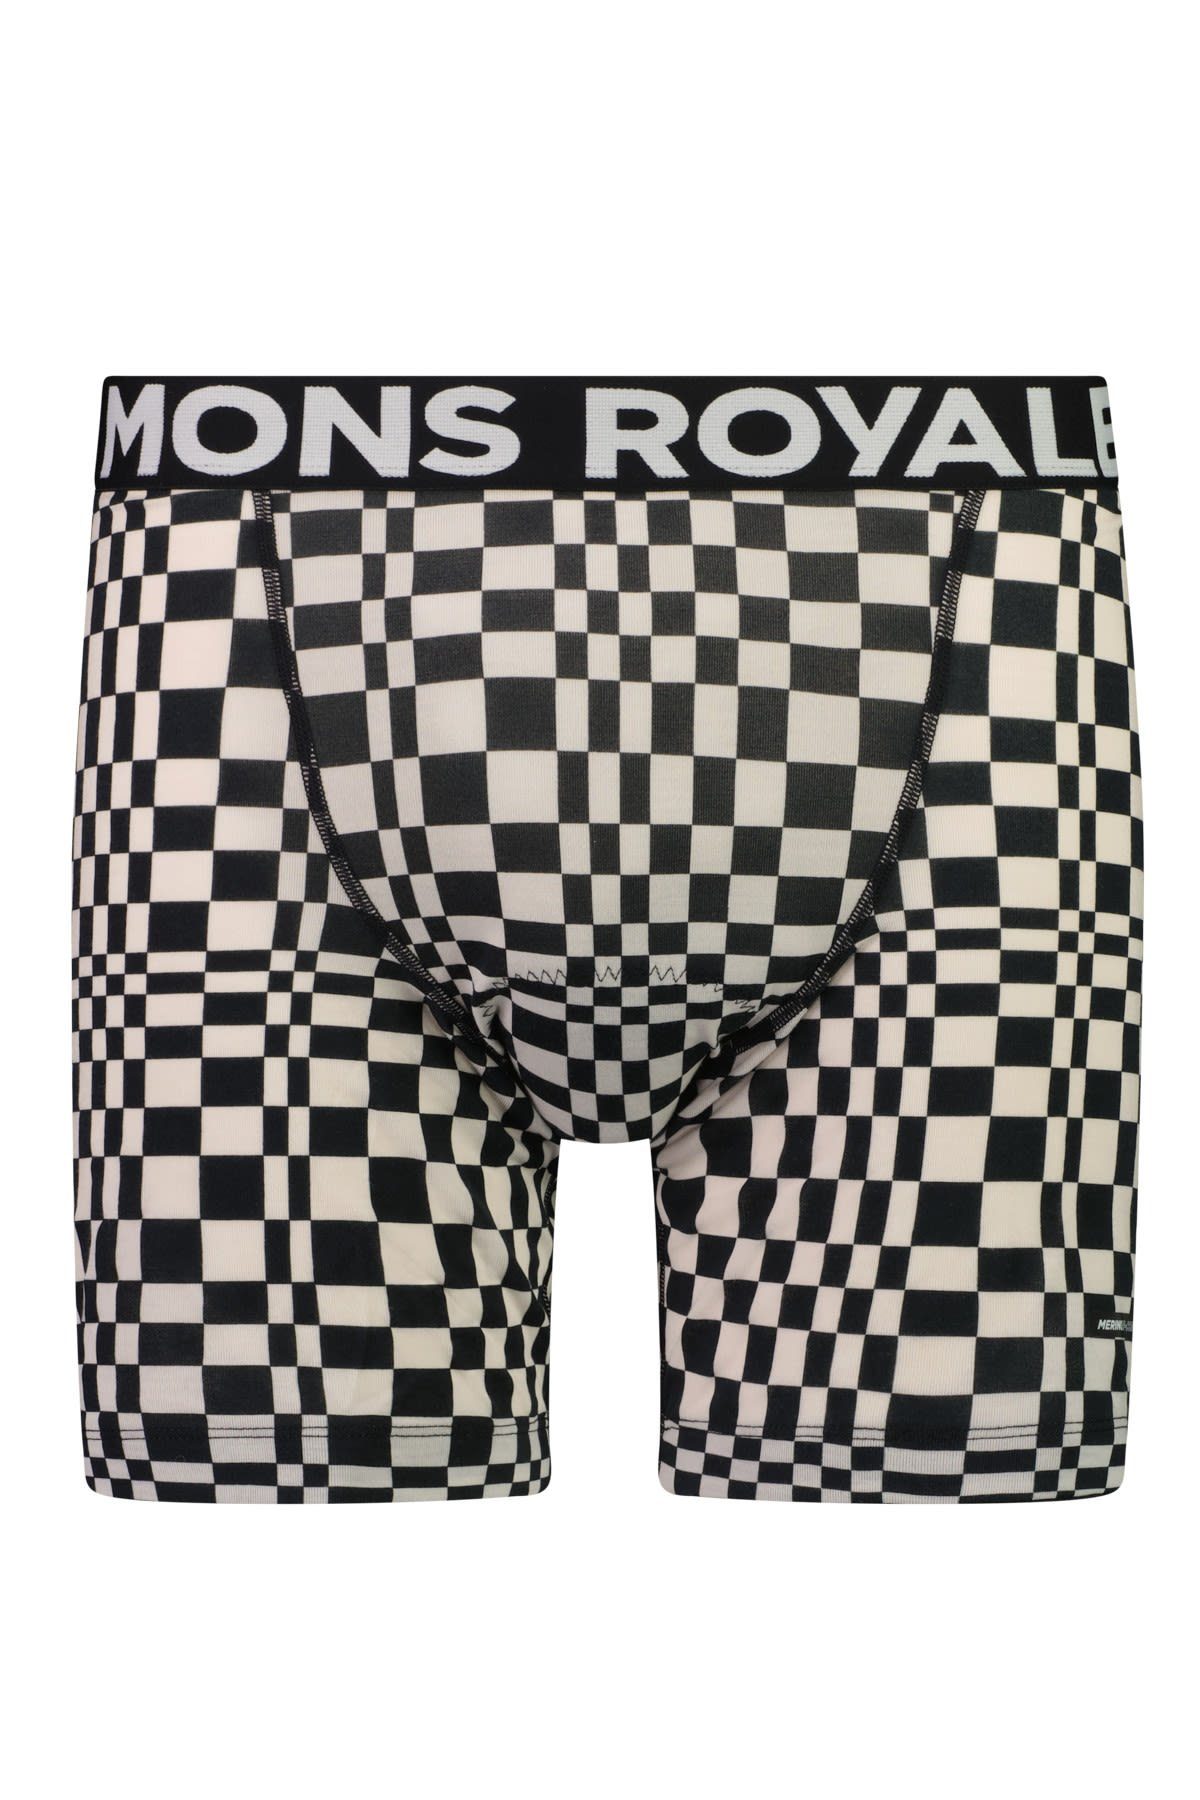 Checkers Mons Lange Unterhose Royale